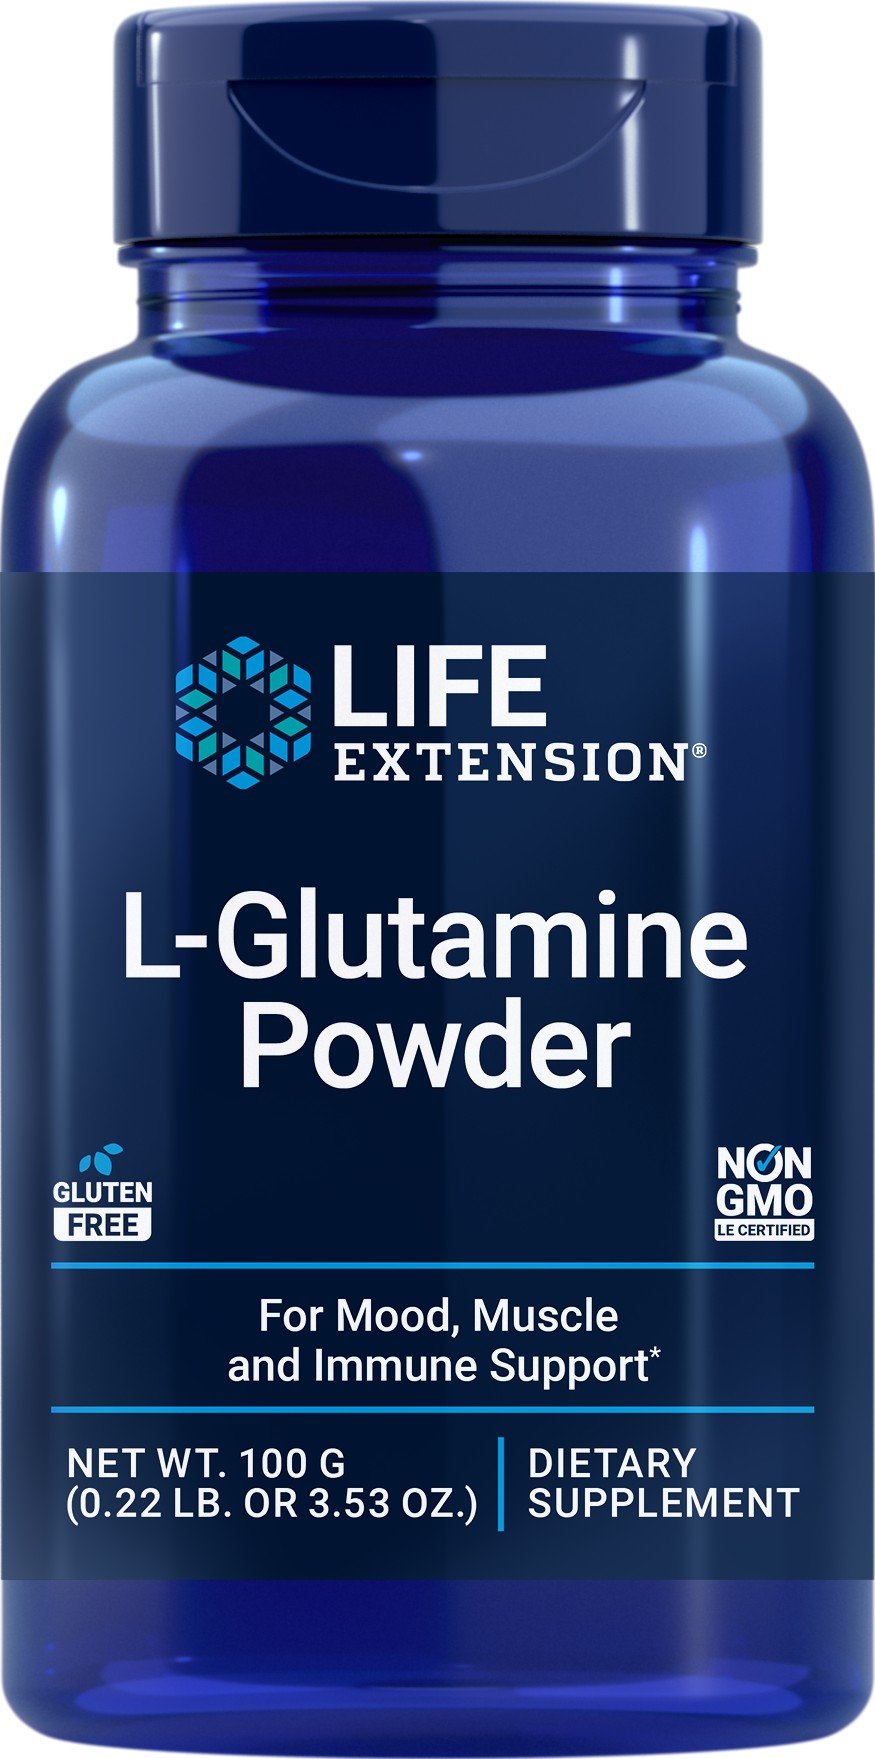 Life Extension L-Glutamine Powder 100 g Powder